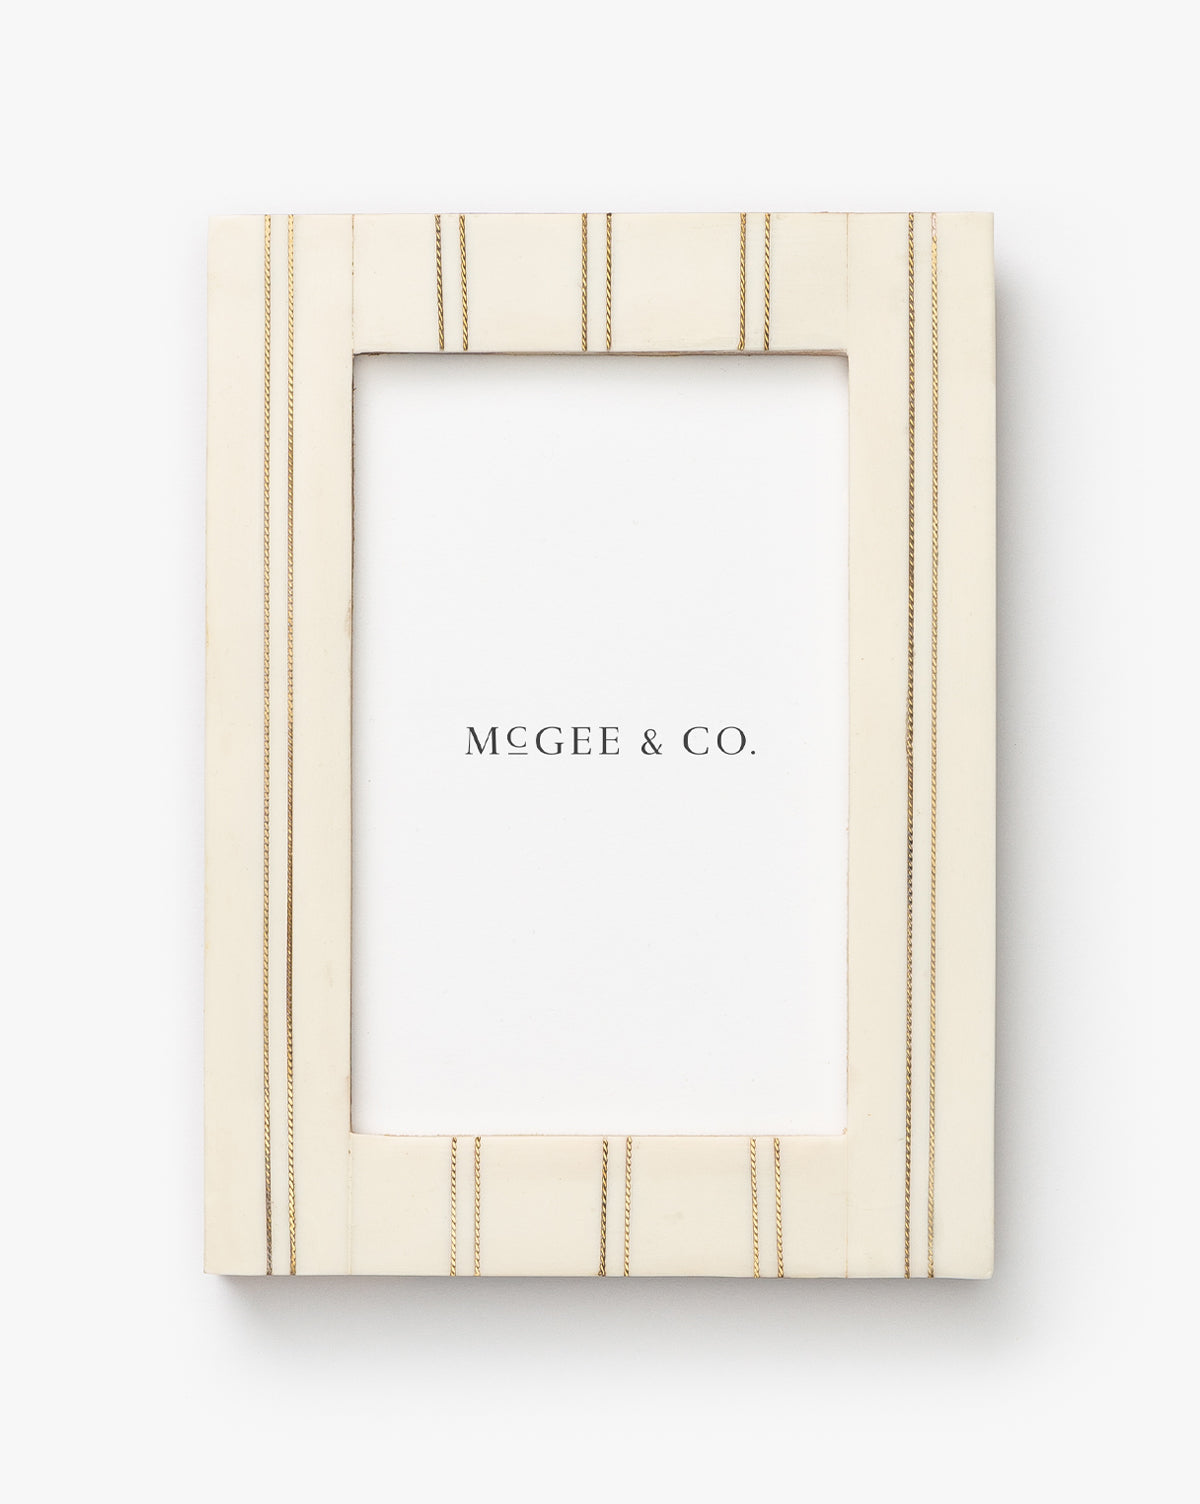 McGee & Co